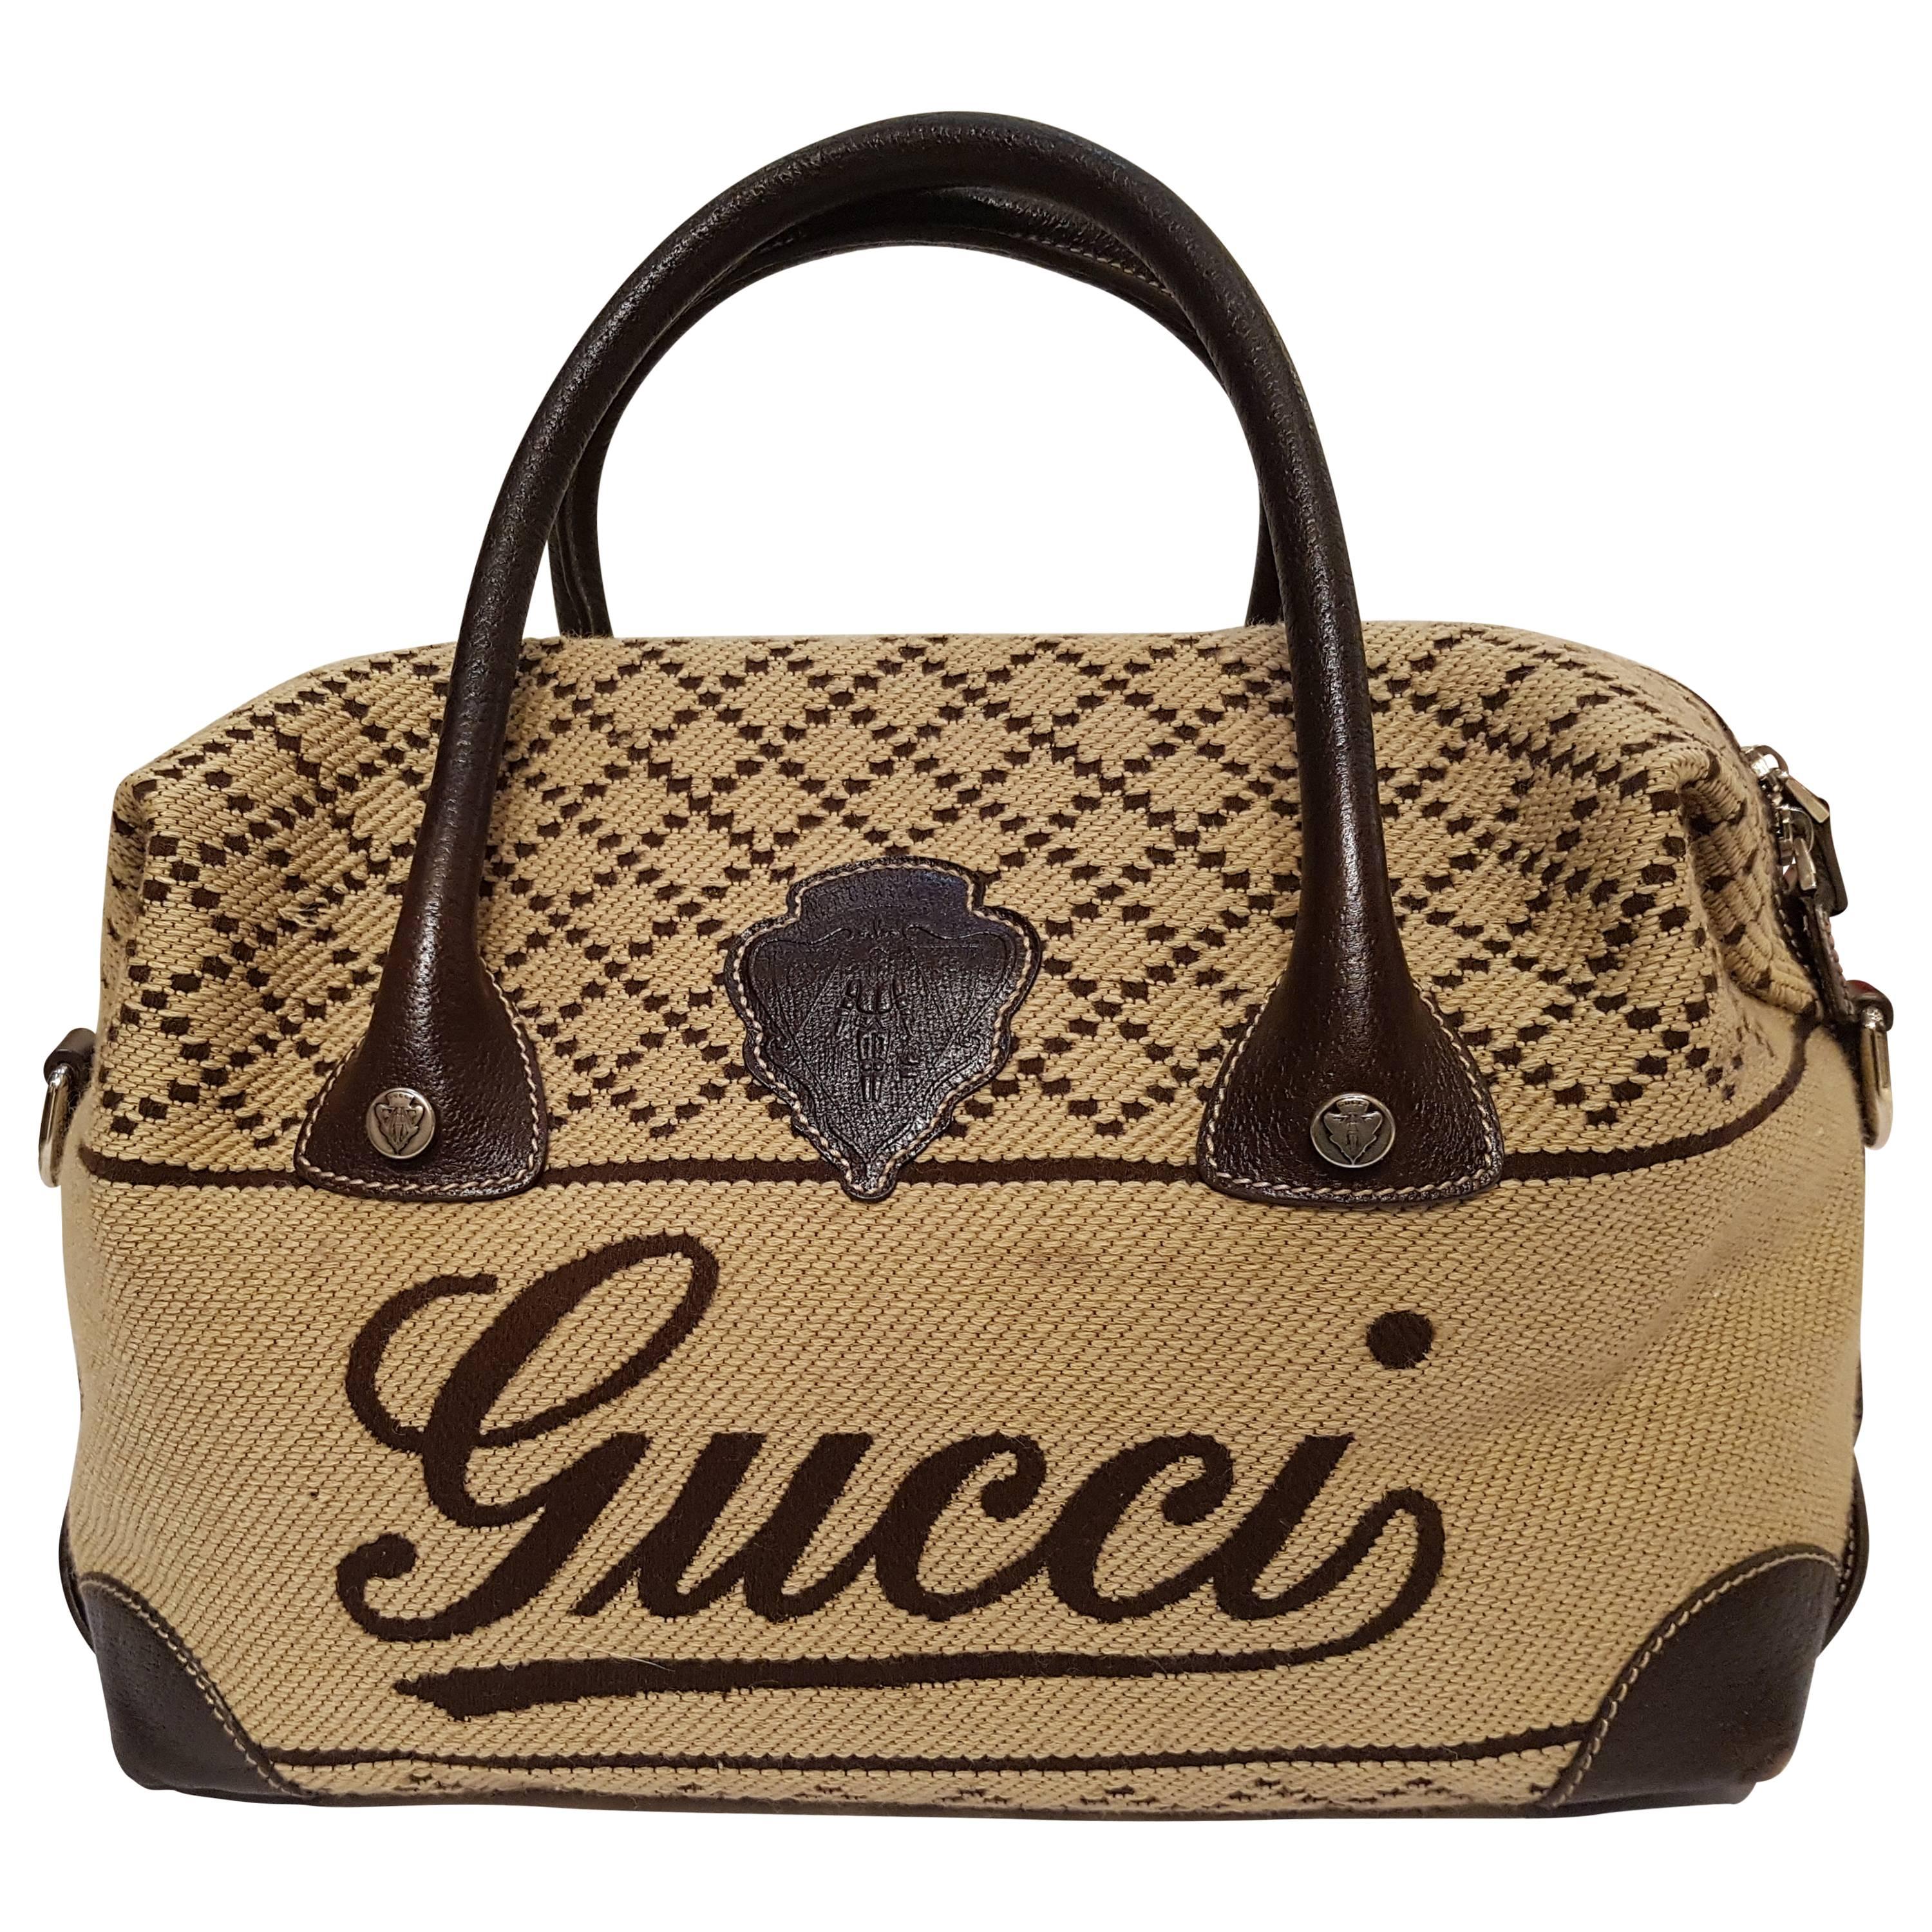 Gucci Brown Wool knit bag